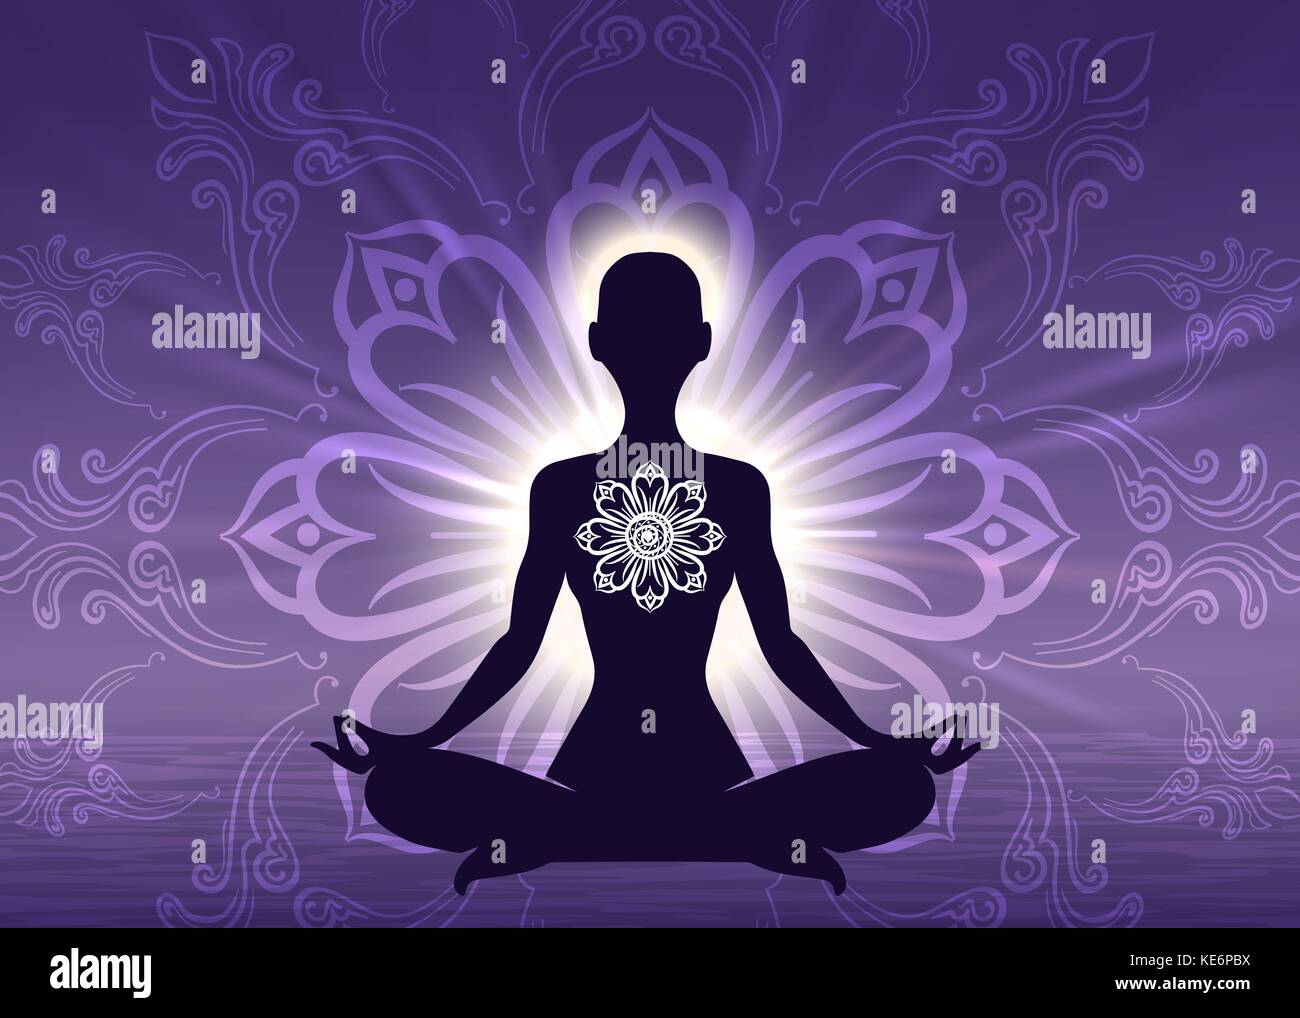 Meditation yoga woman silhouette Stock Vector